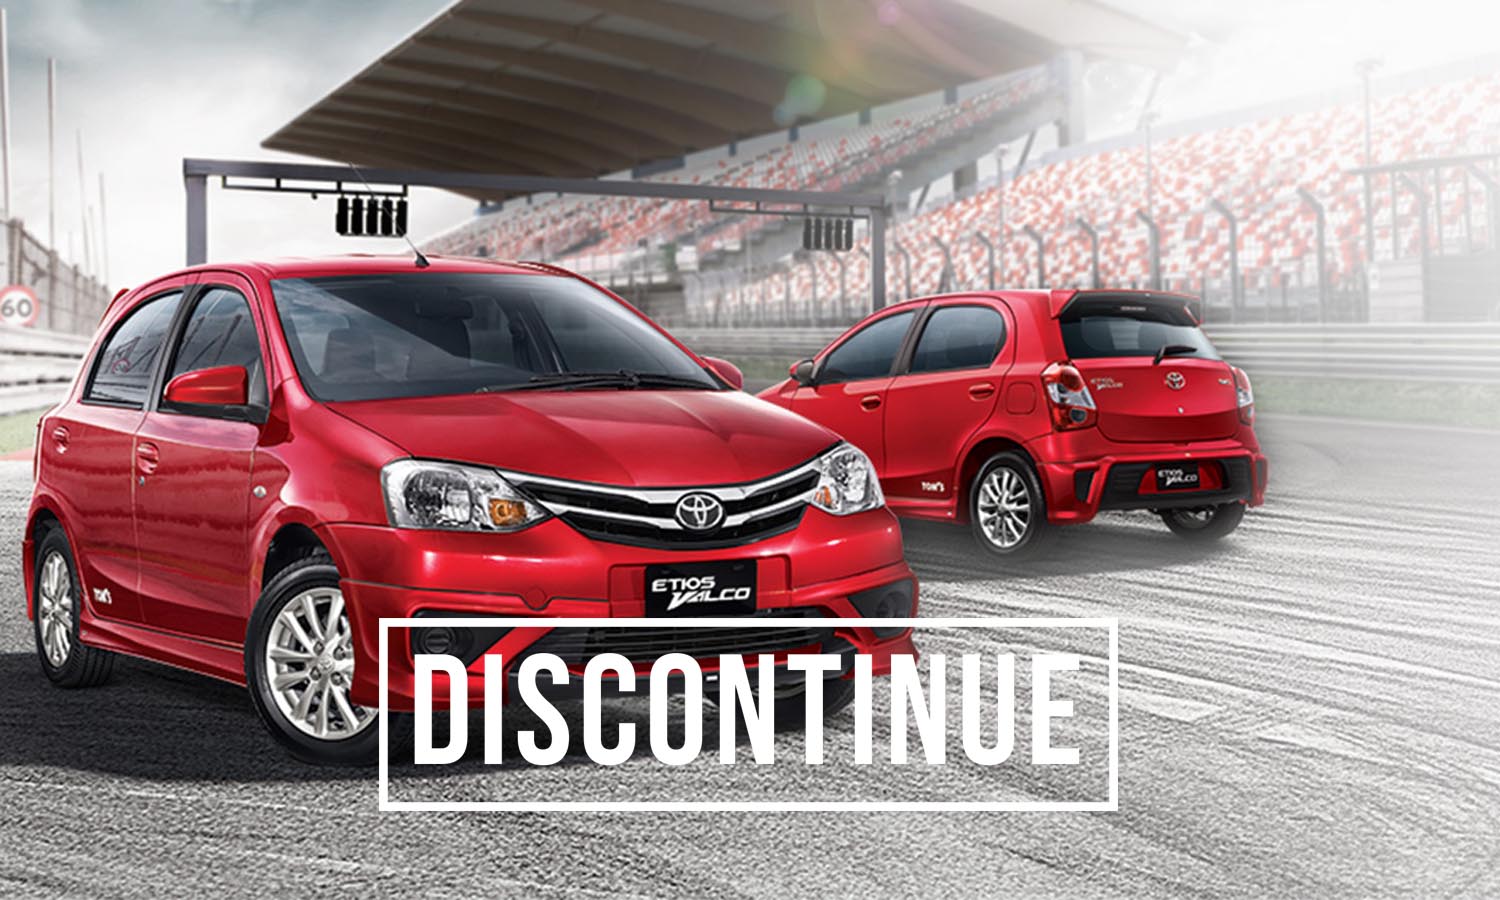 Berita, Diskontinyu etios valco: Toyota Hentikan Produksi Toyota Etios Valco di Indonesia